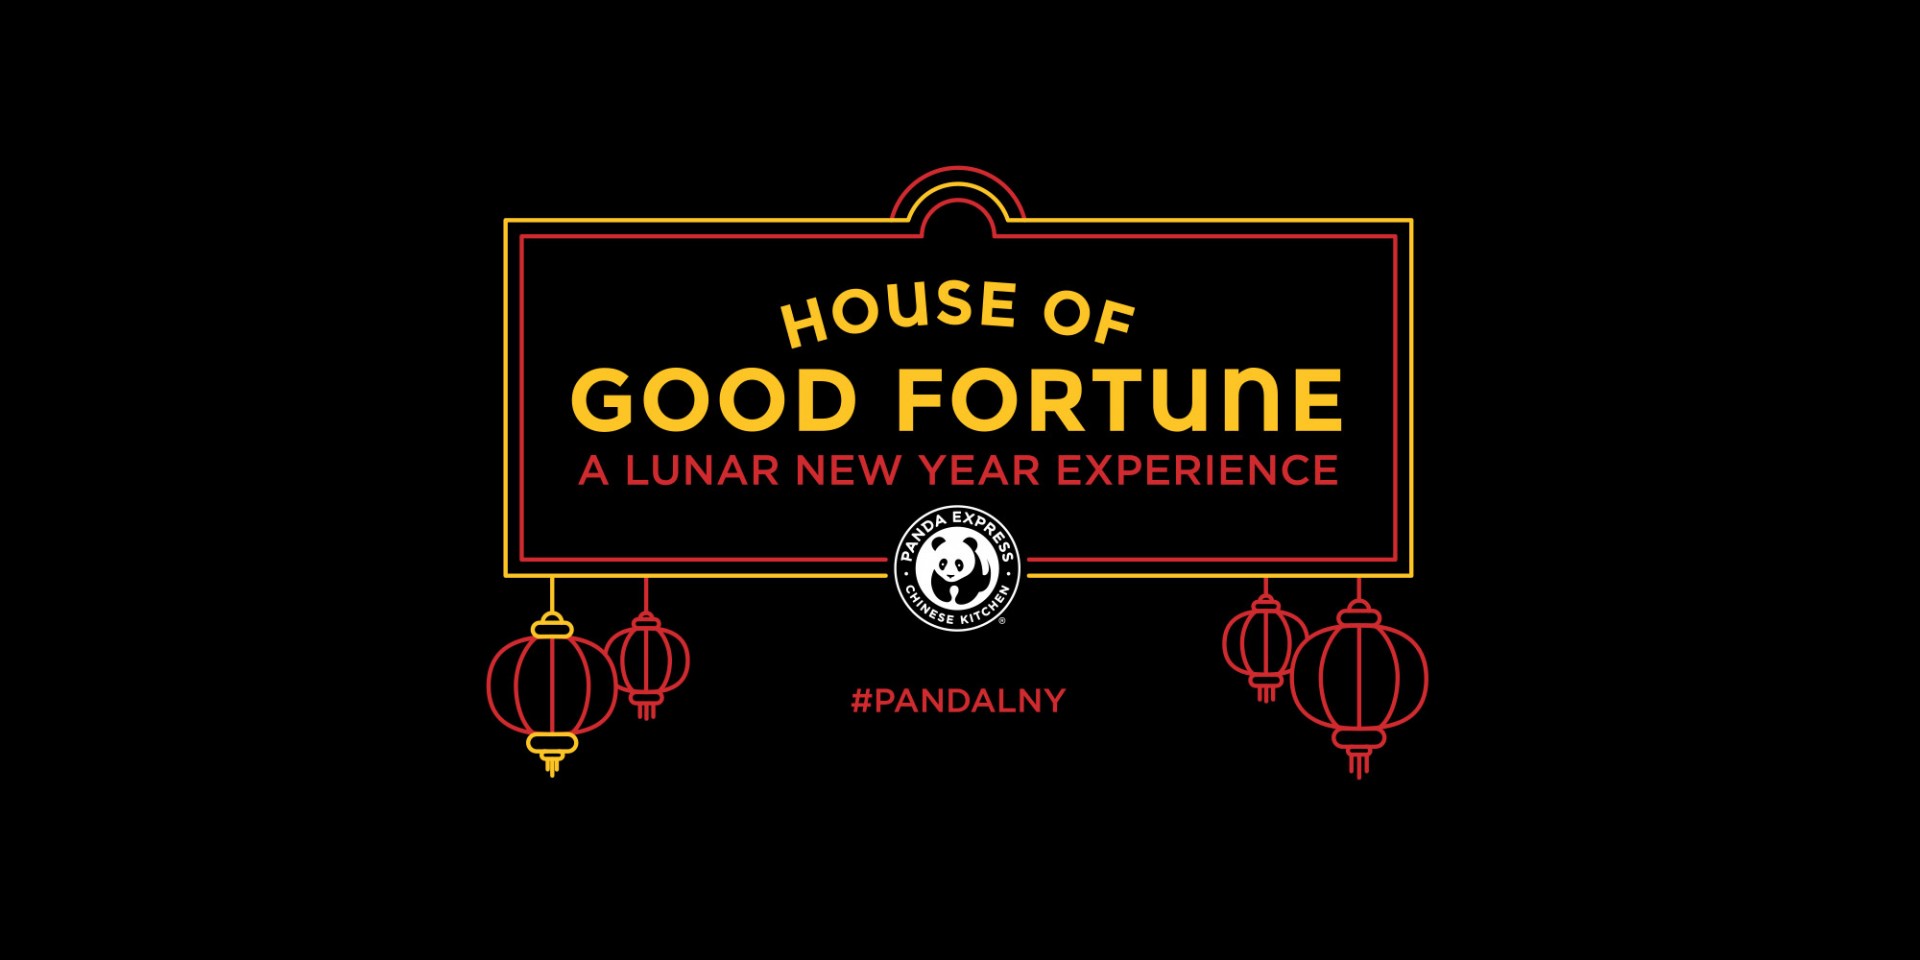 Panda Express | Lunar New Year 2019